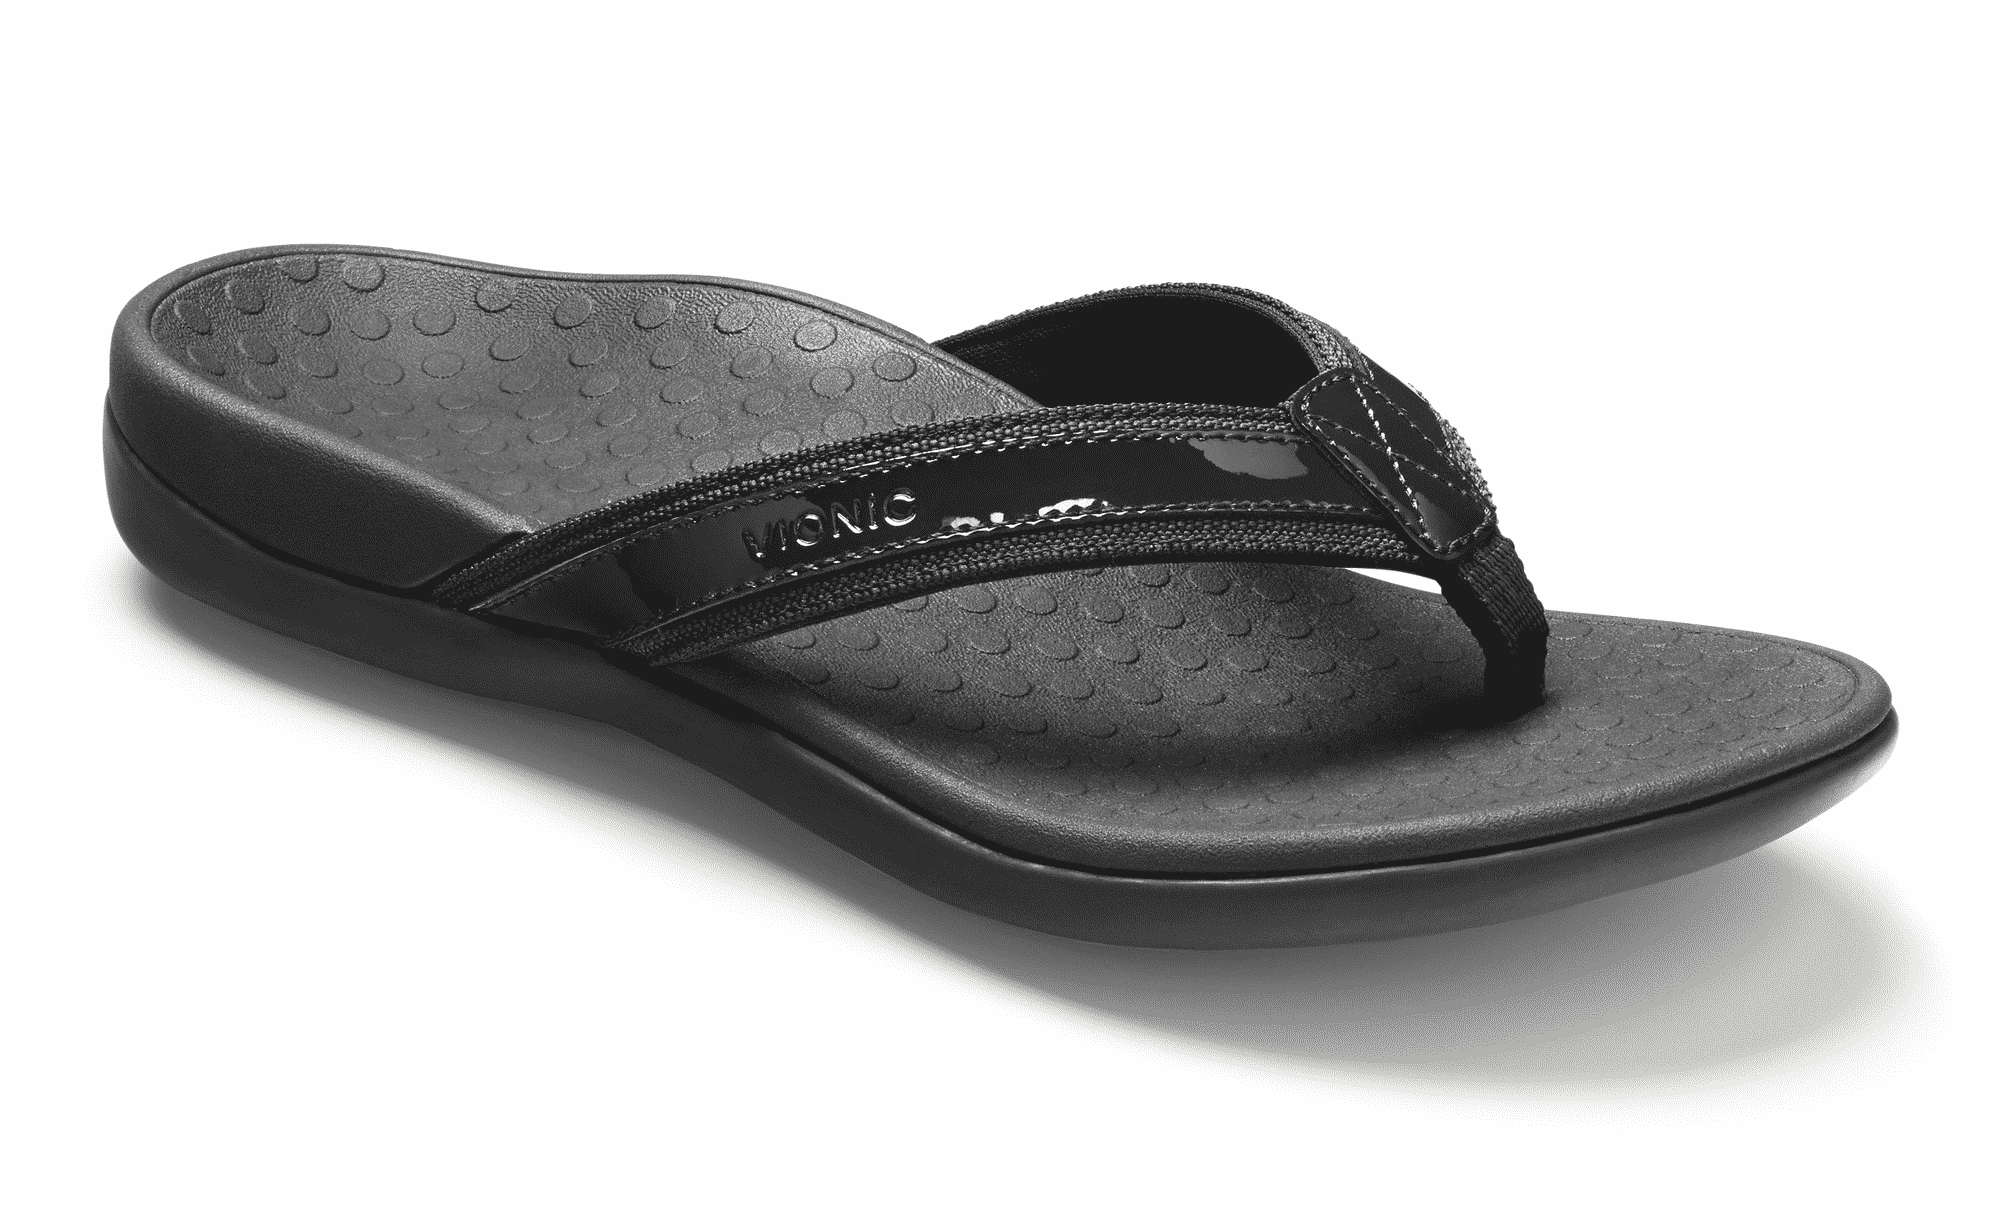 vionic black flip flops